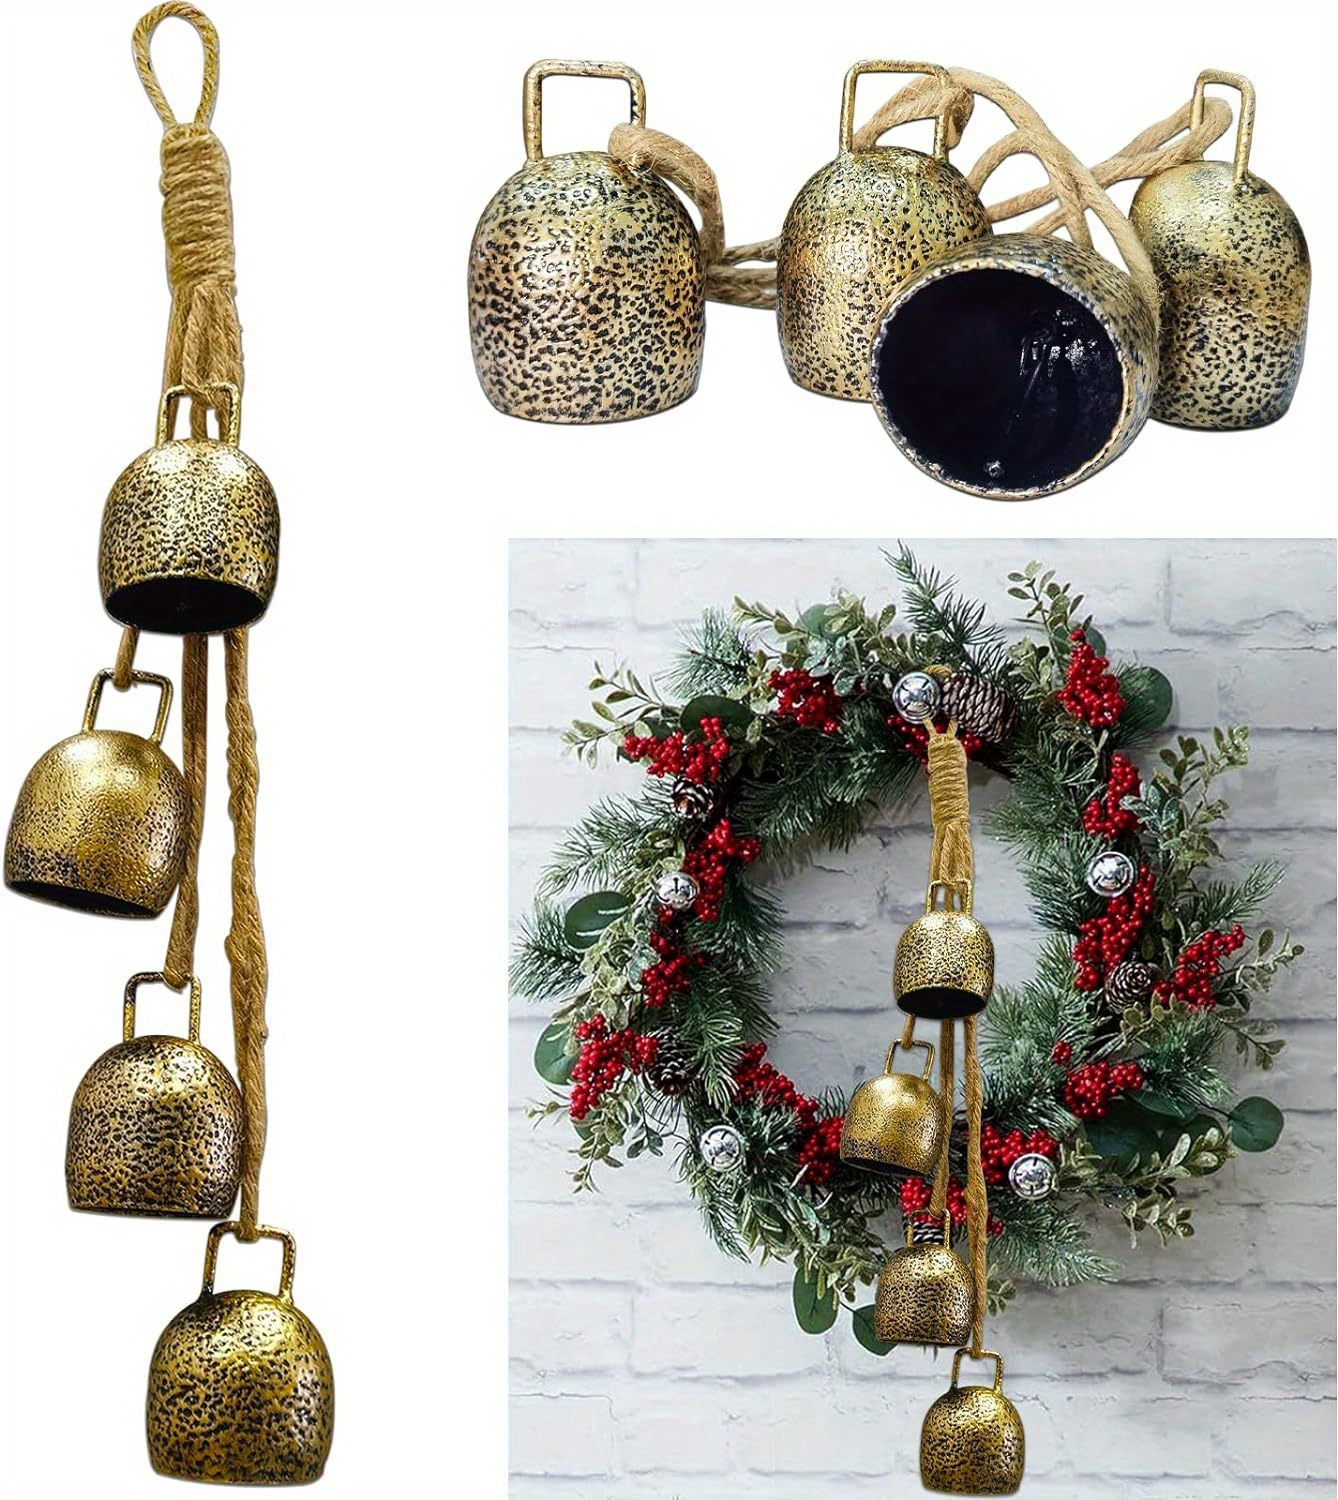 Lolmot Iron Hanging Cow Bells Christmas Artwork Vintage Style